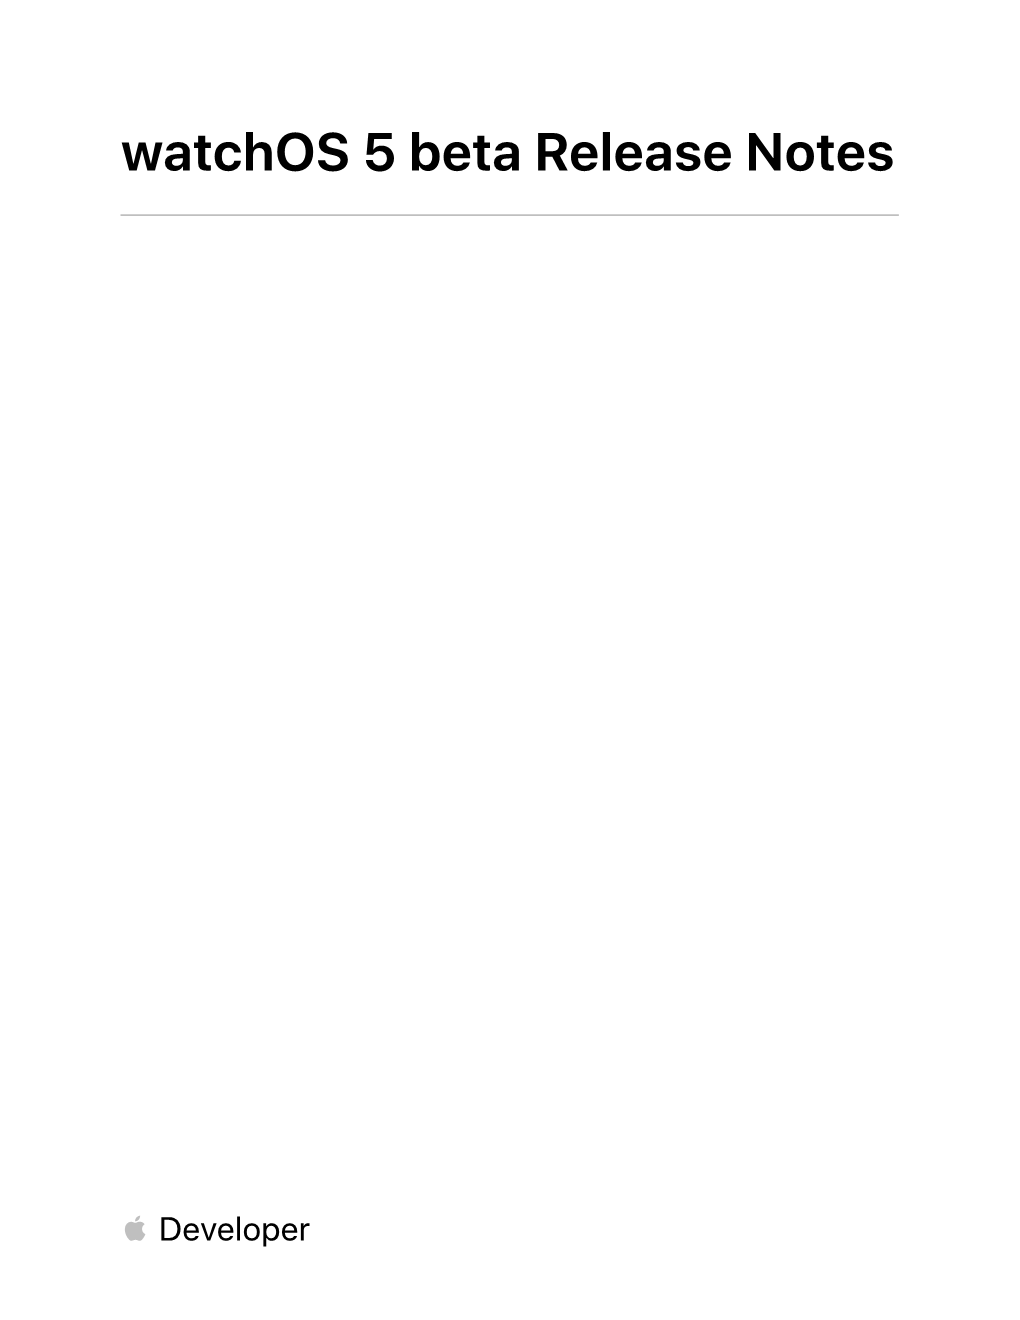 Watchos 5 Beta Release Notes